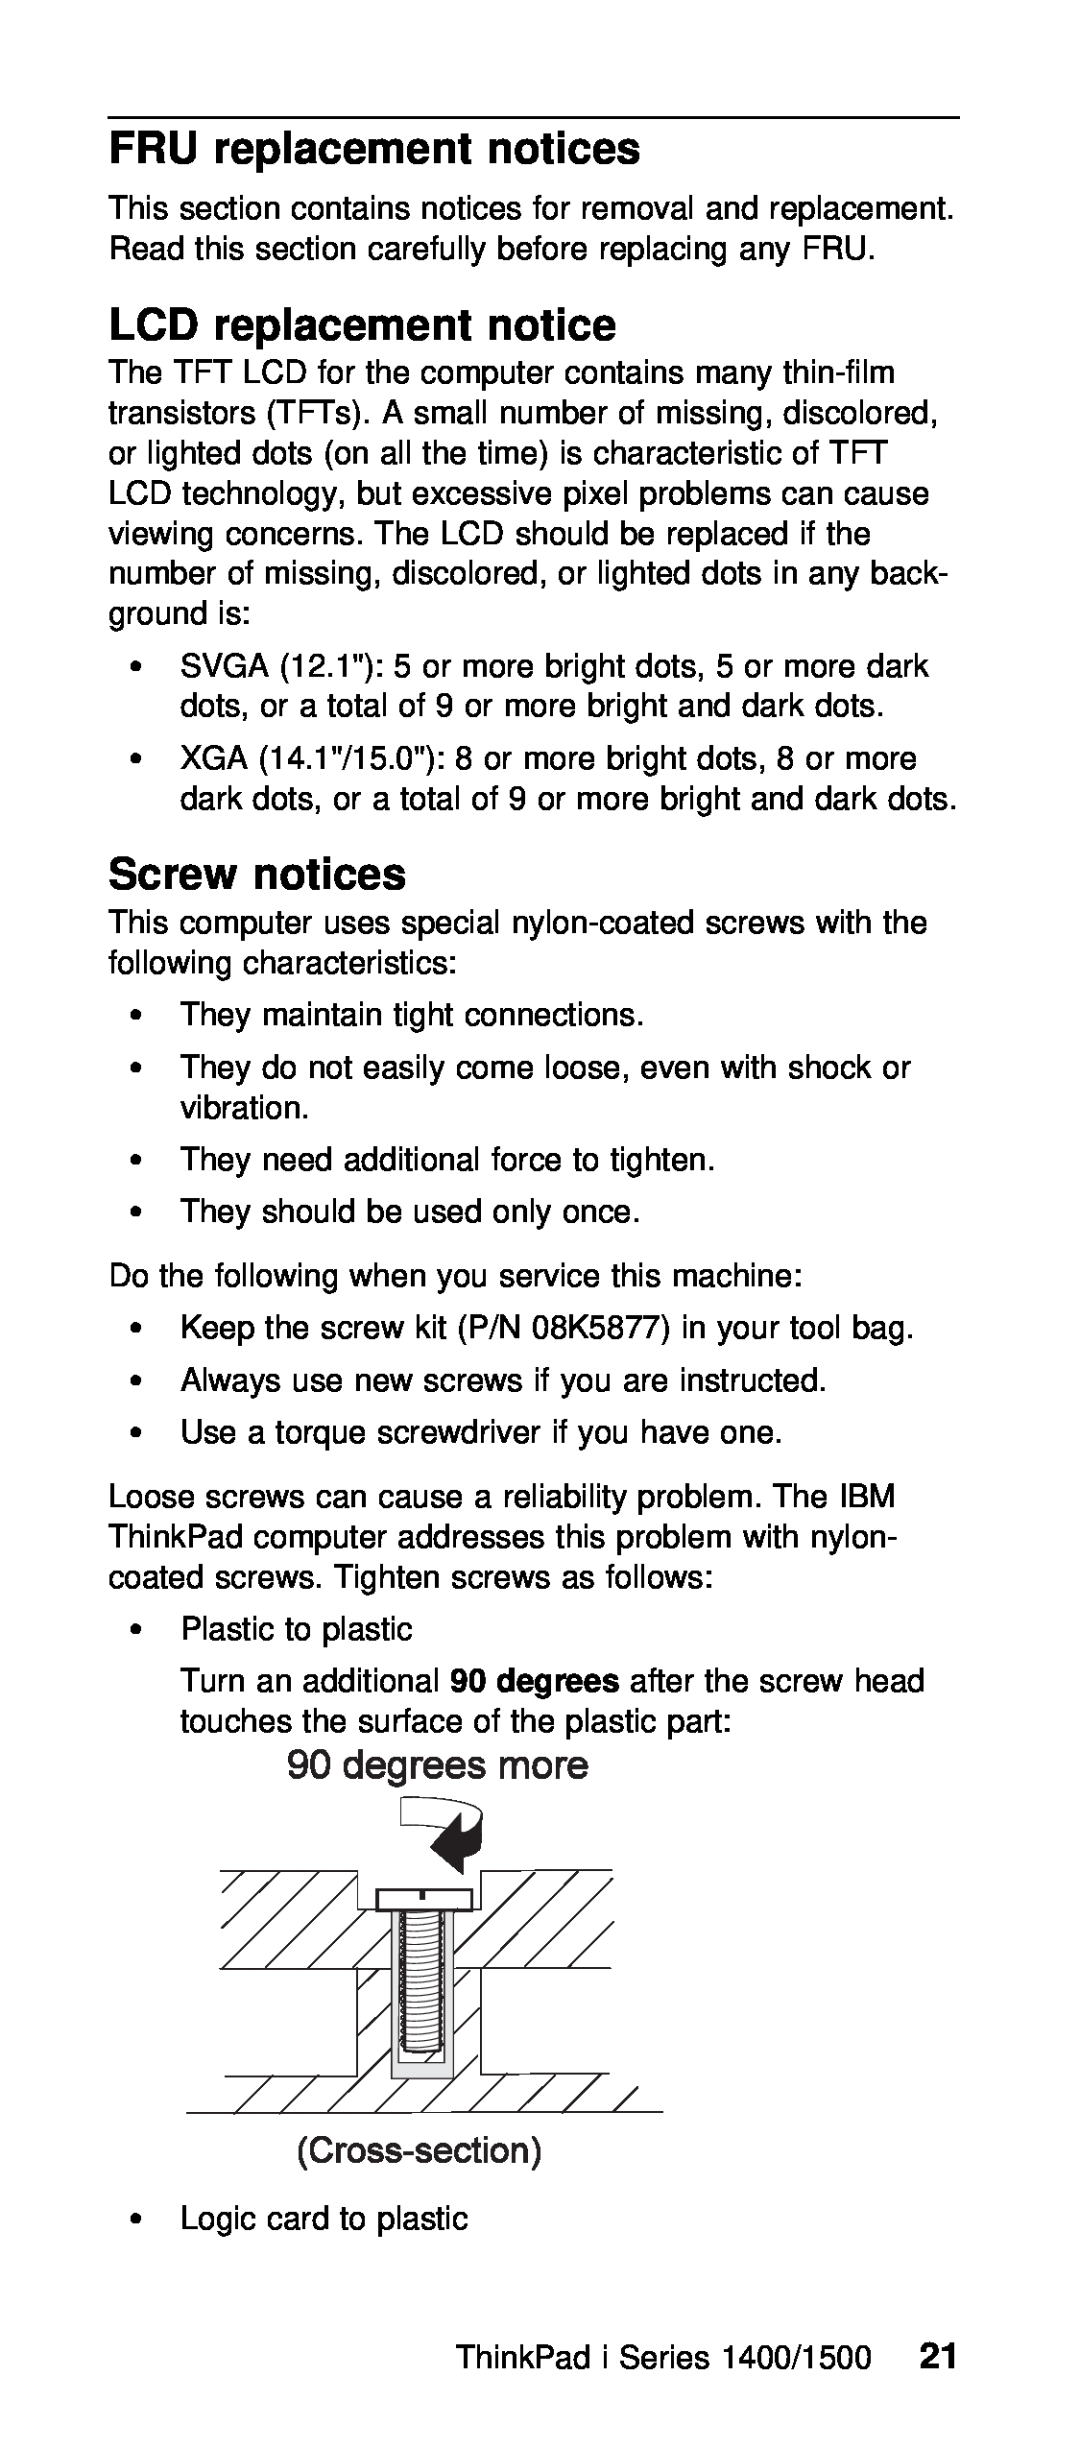 IBM Series 1400, Series 1500 manual FRU replacement notices, LCD replacement notice, Screw notices, additional 90 degrees 